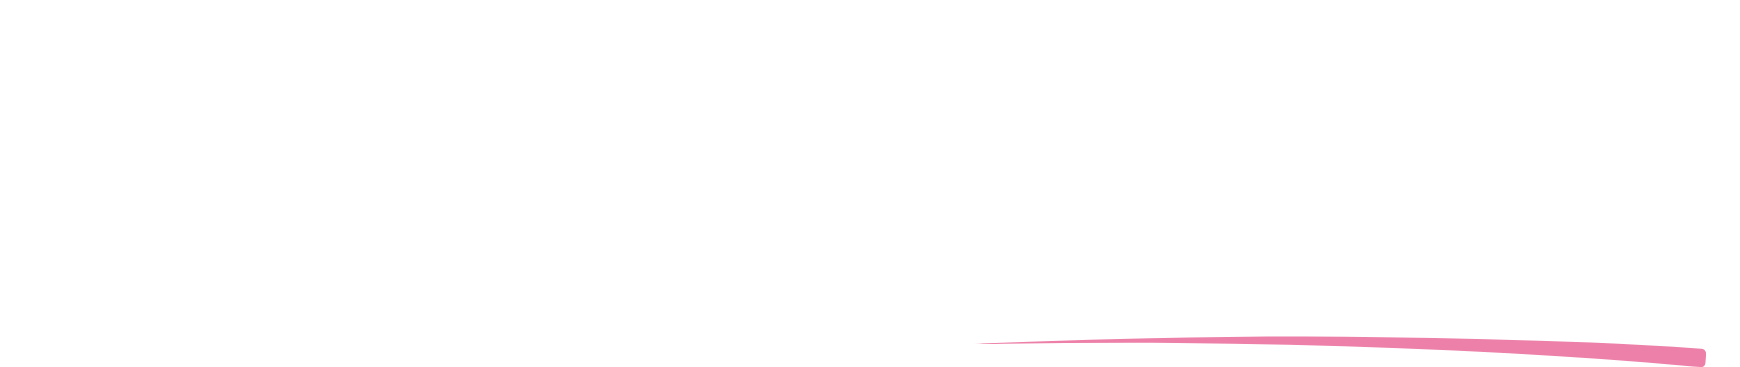 AutoNation logo large for dark backgrounds (transparent PNG)